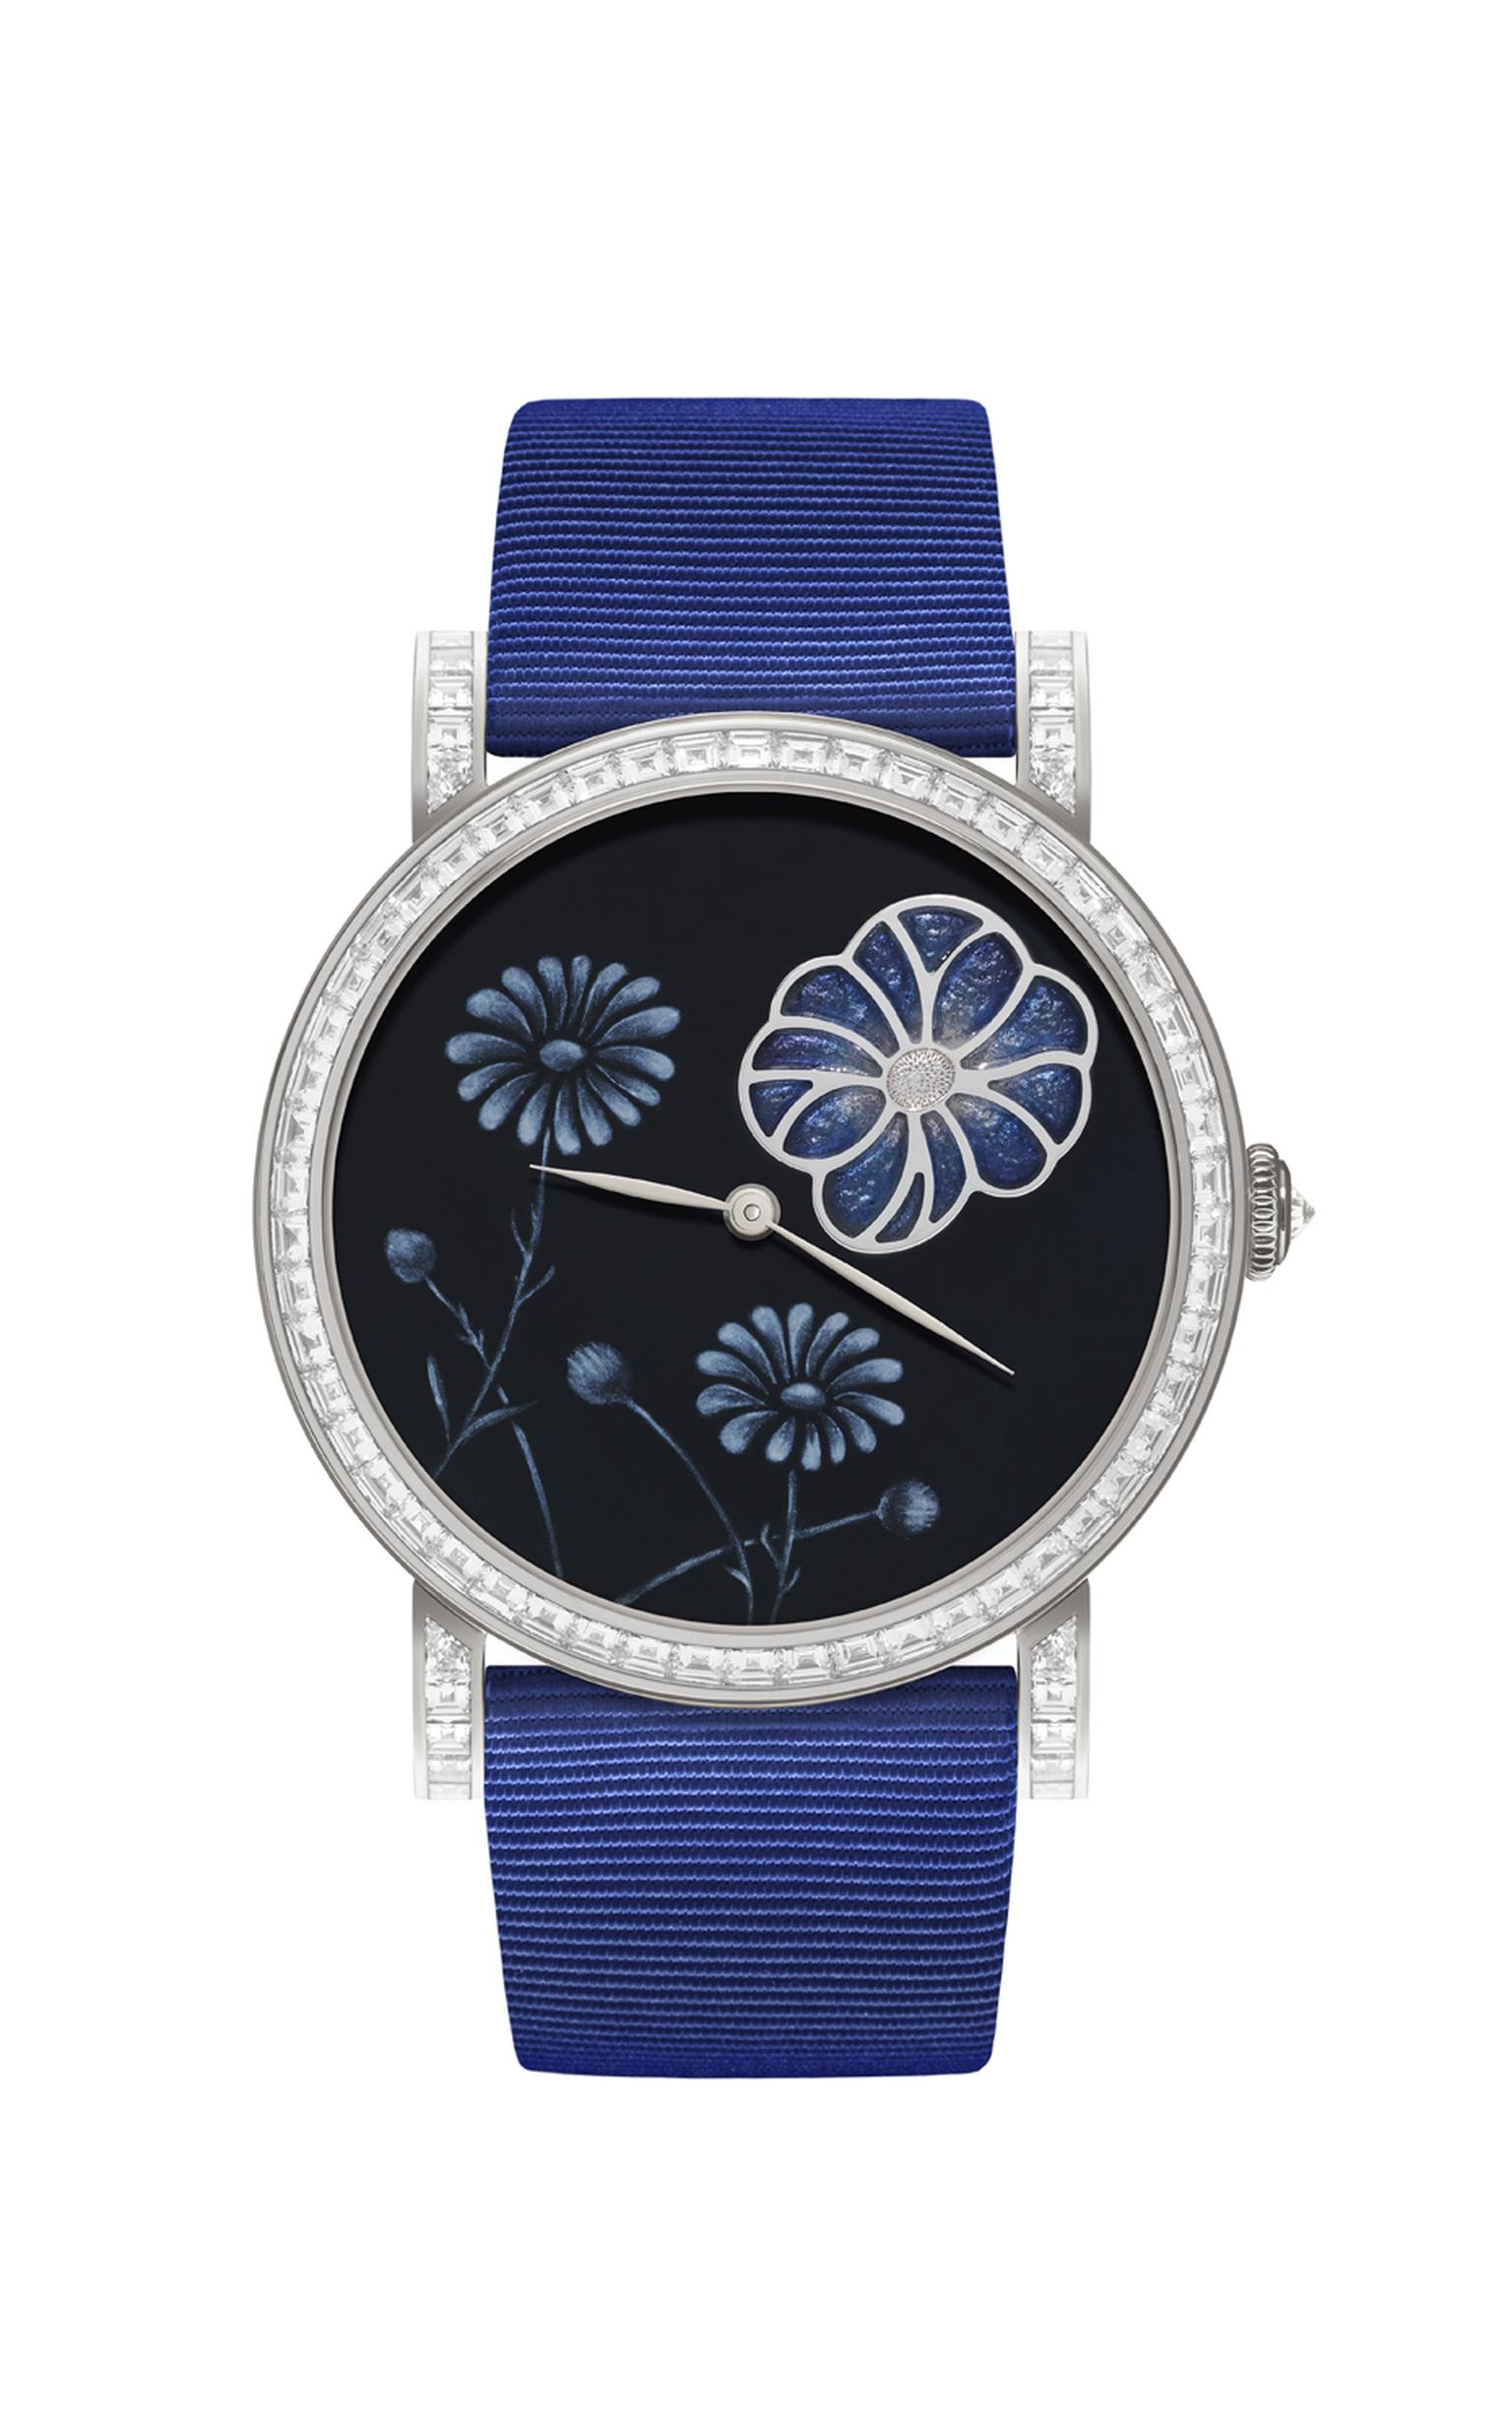 DeLaneau Daisy plique a jour watch features an intricate Grand Feu enamel dial and a white gold case set with 74 baguette-cut diamonds and 116 brilliant-cut diamonds, with a diamond-embedded crown.